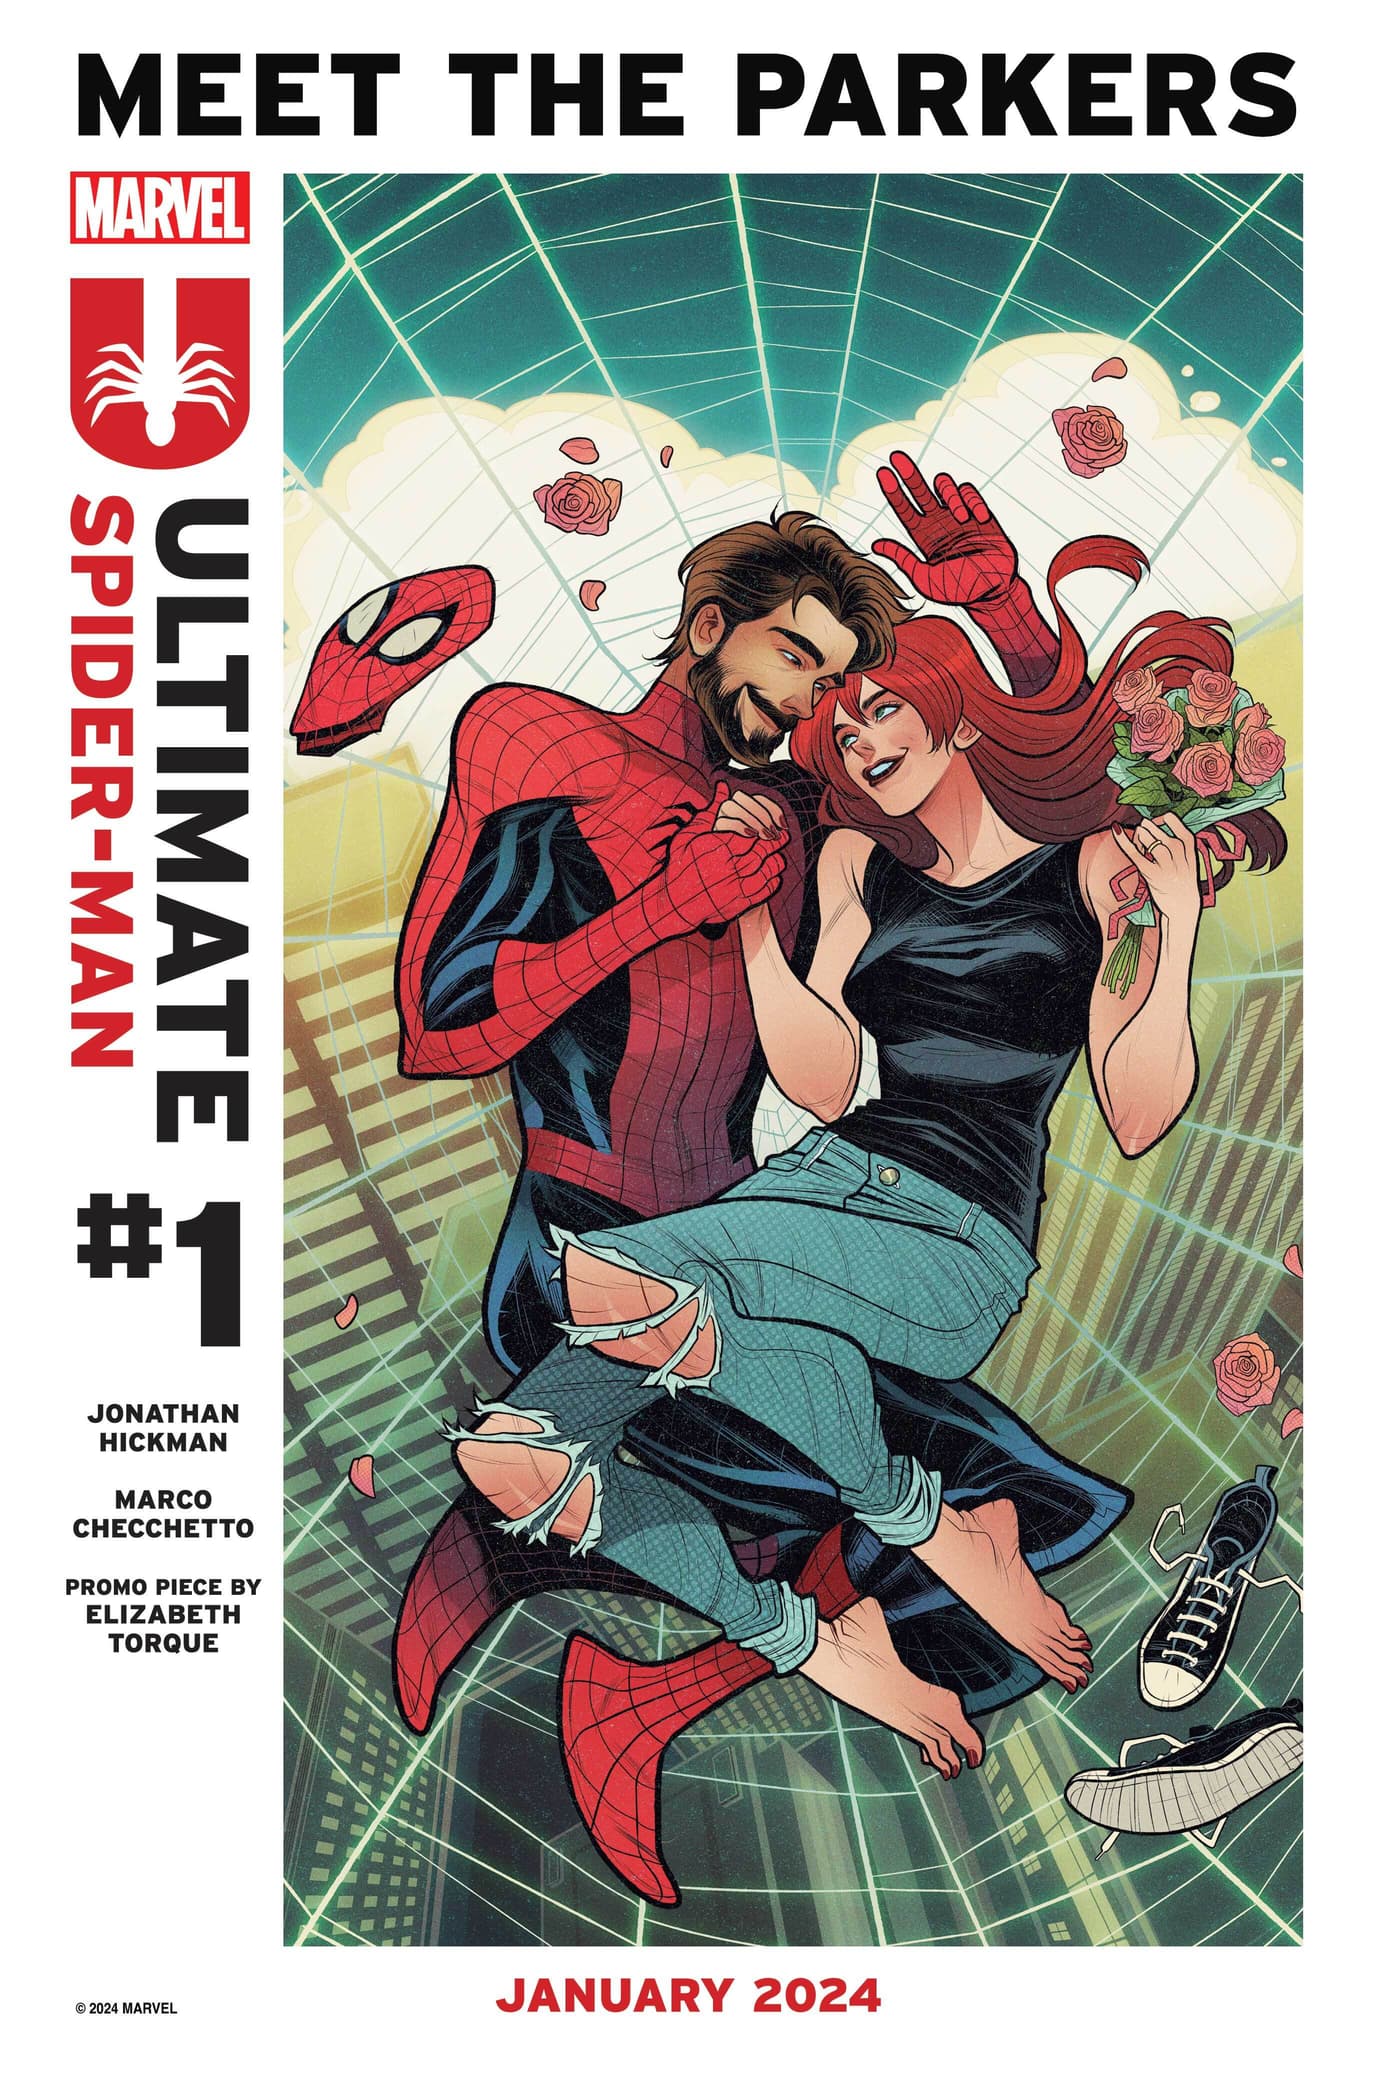 ULTIMATE SPIDER-MAN #1 variant cover by Elizabeth Torque